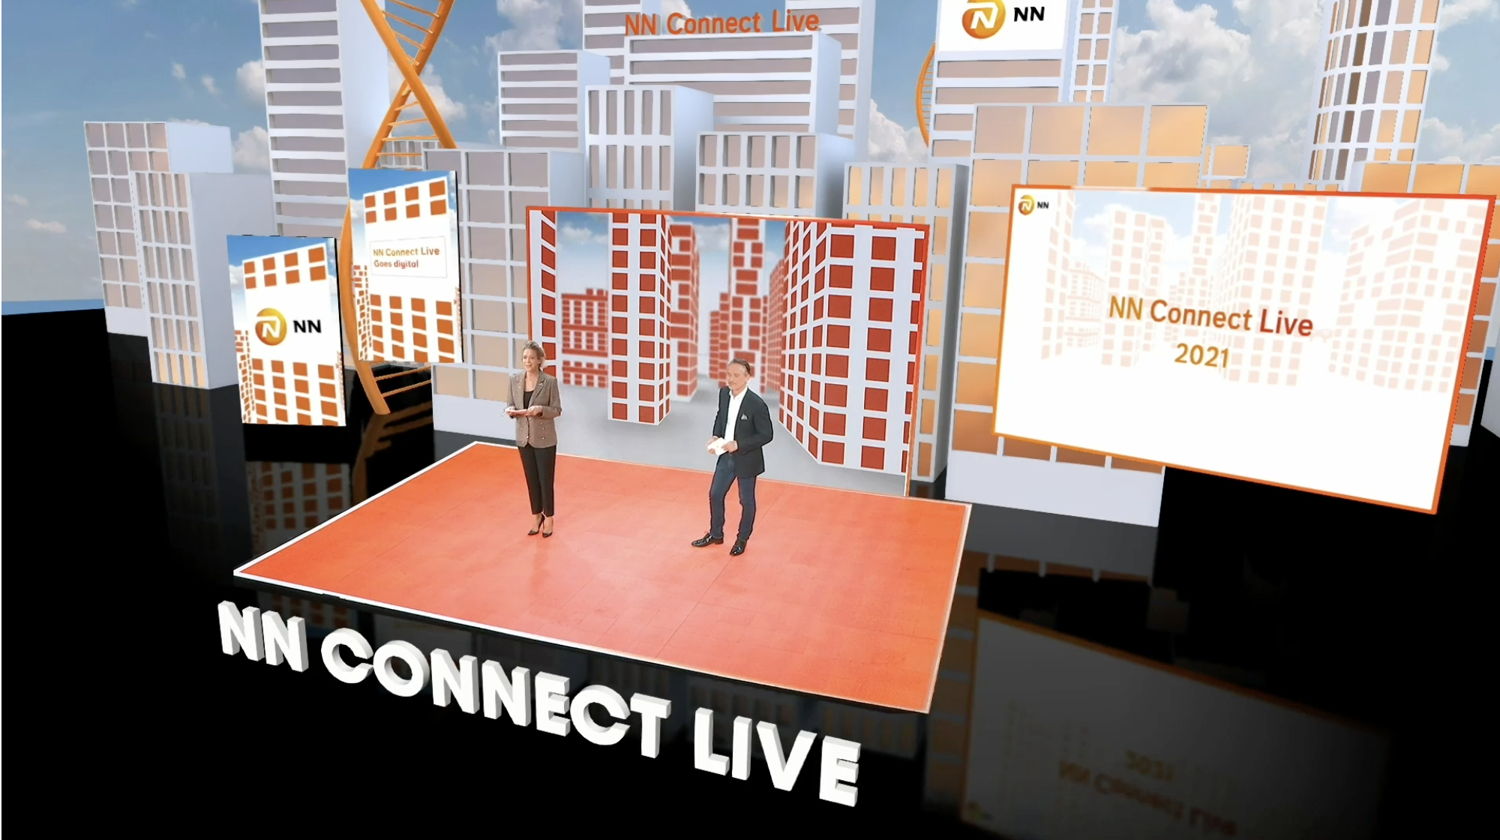 NN Connect Live 2021